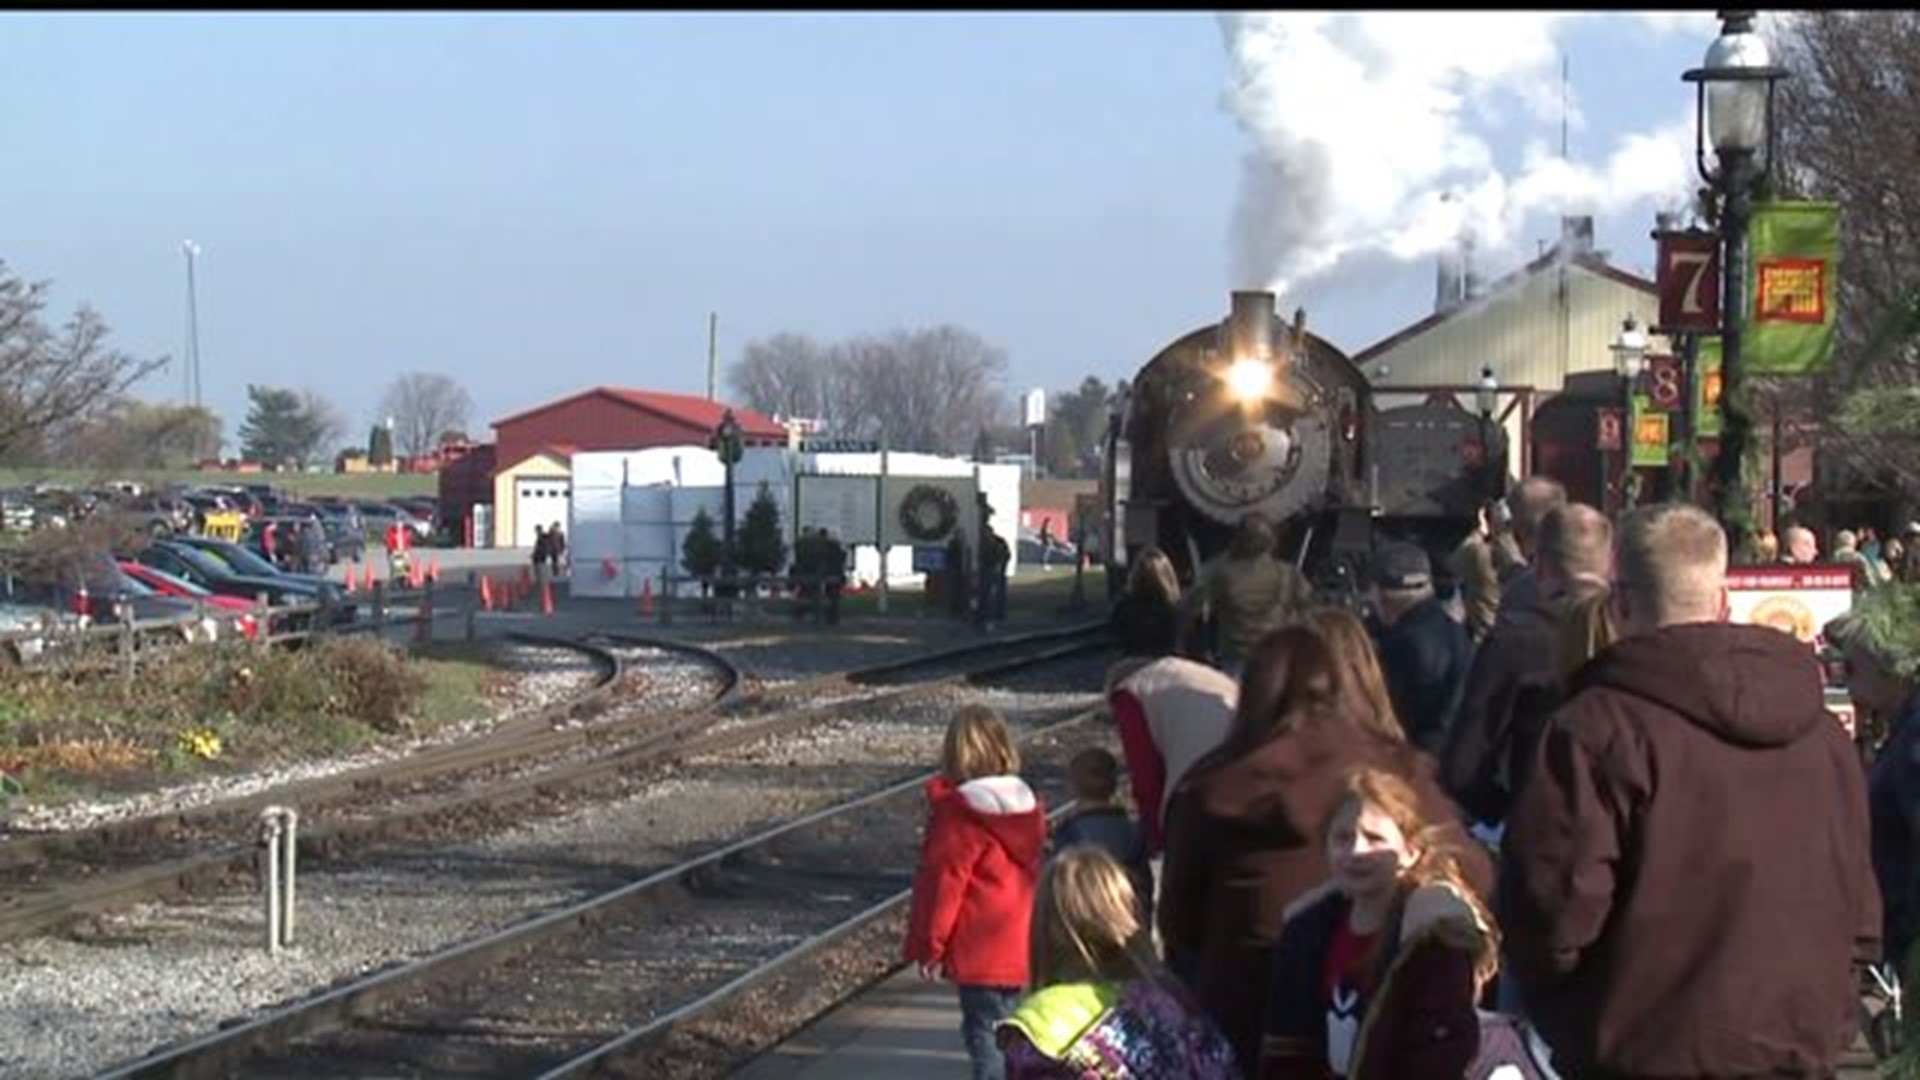 Railroad Museum of Pennsylvania showcases historic rail travel